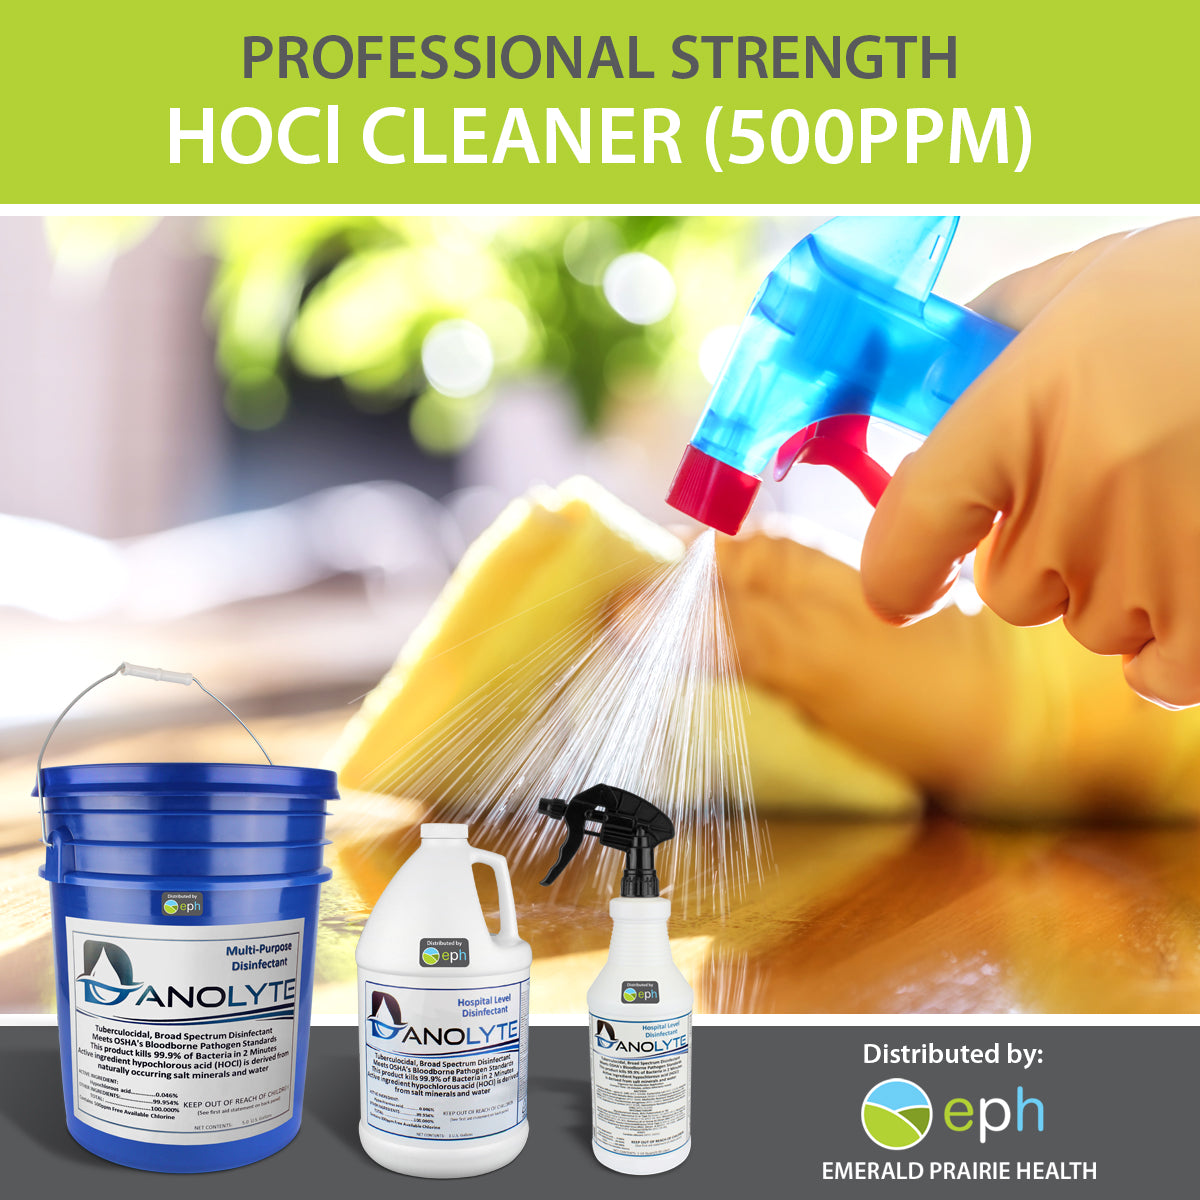 Danolyte Disinfectant (Professional Grade) 500ppm - 1 Quart With Sprayer